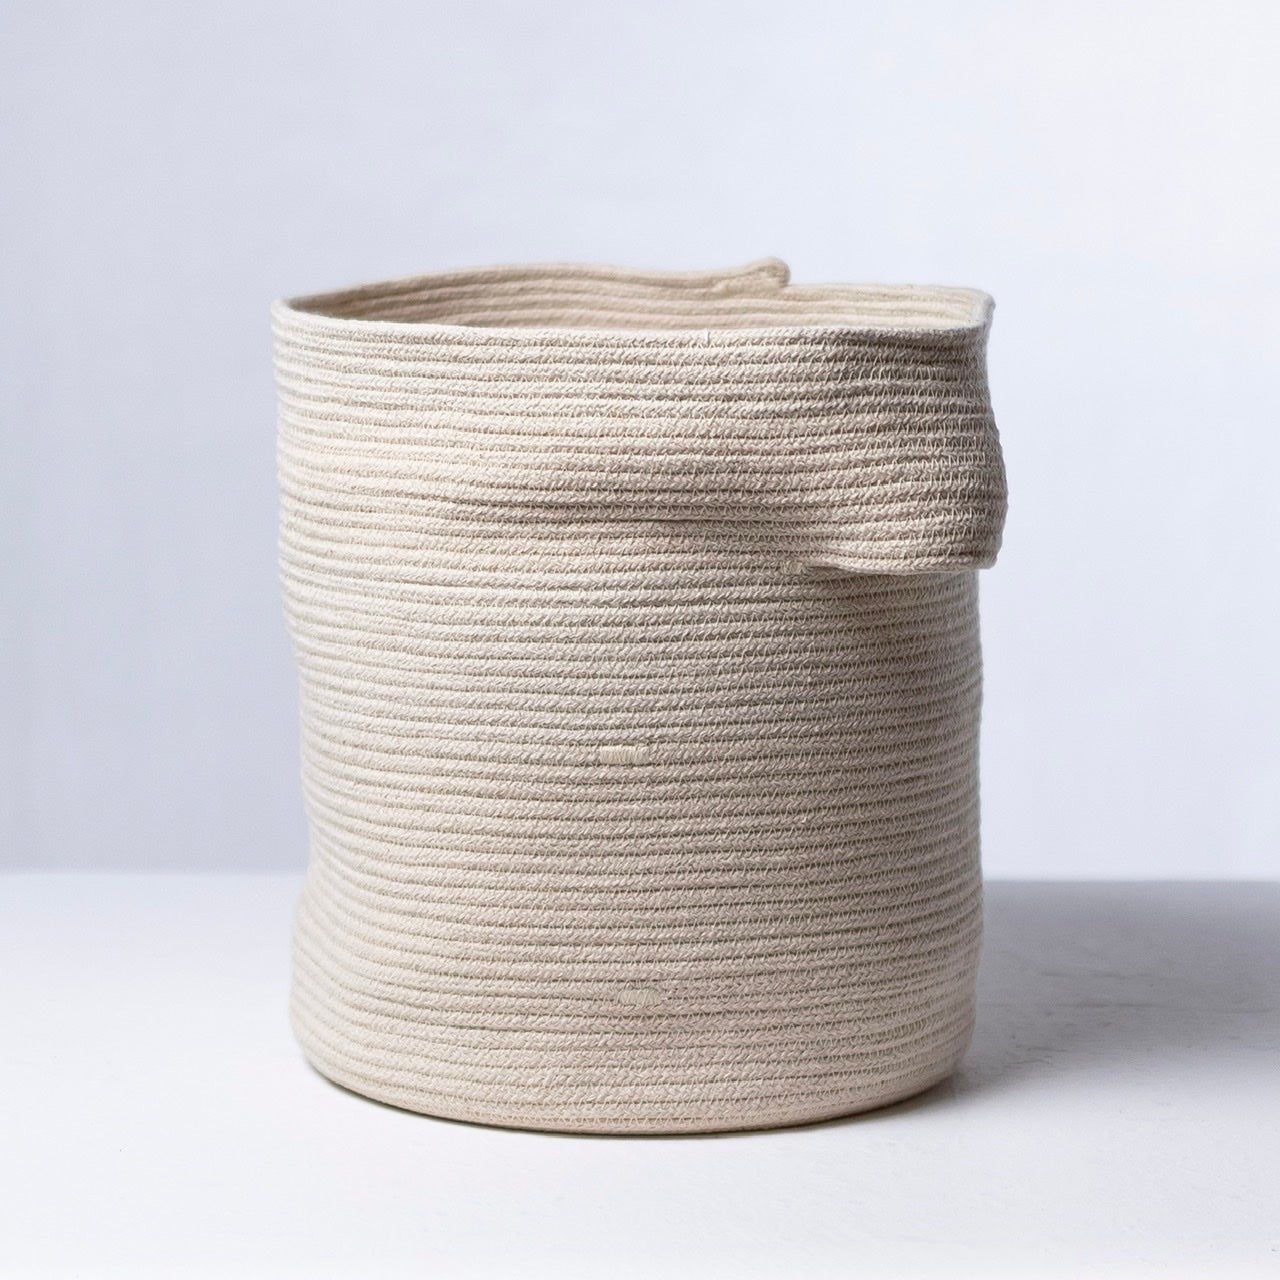 Amelia Samari Billow Basket - Natural Medium